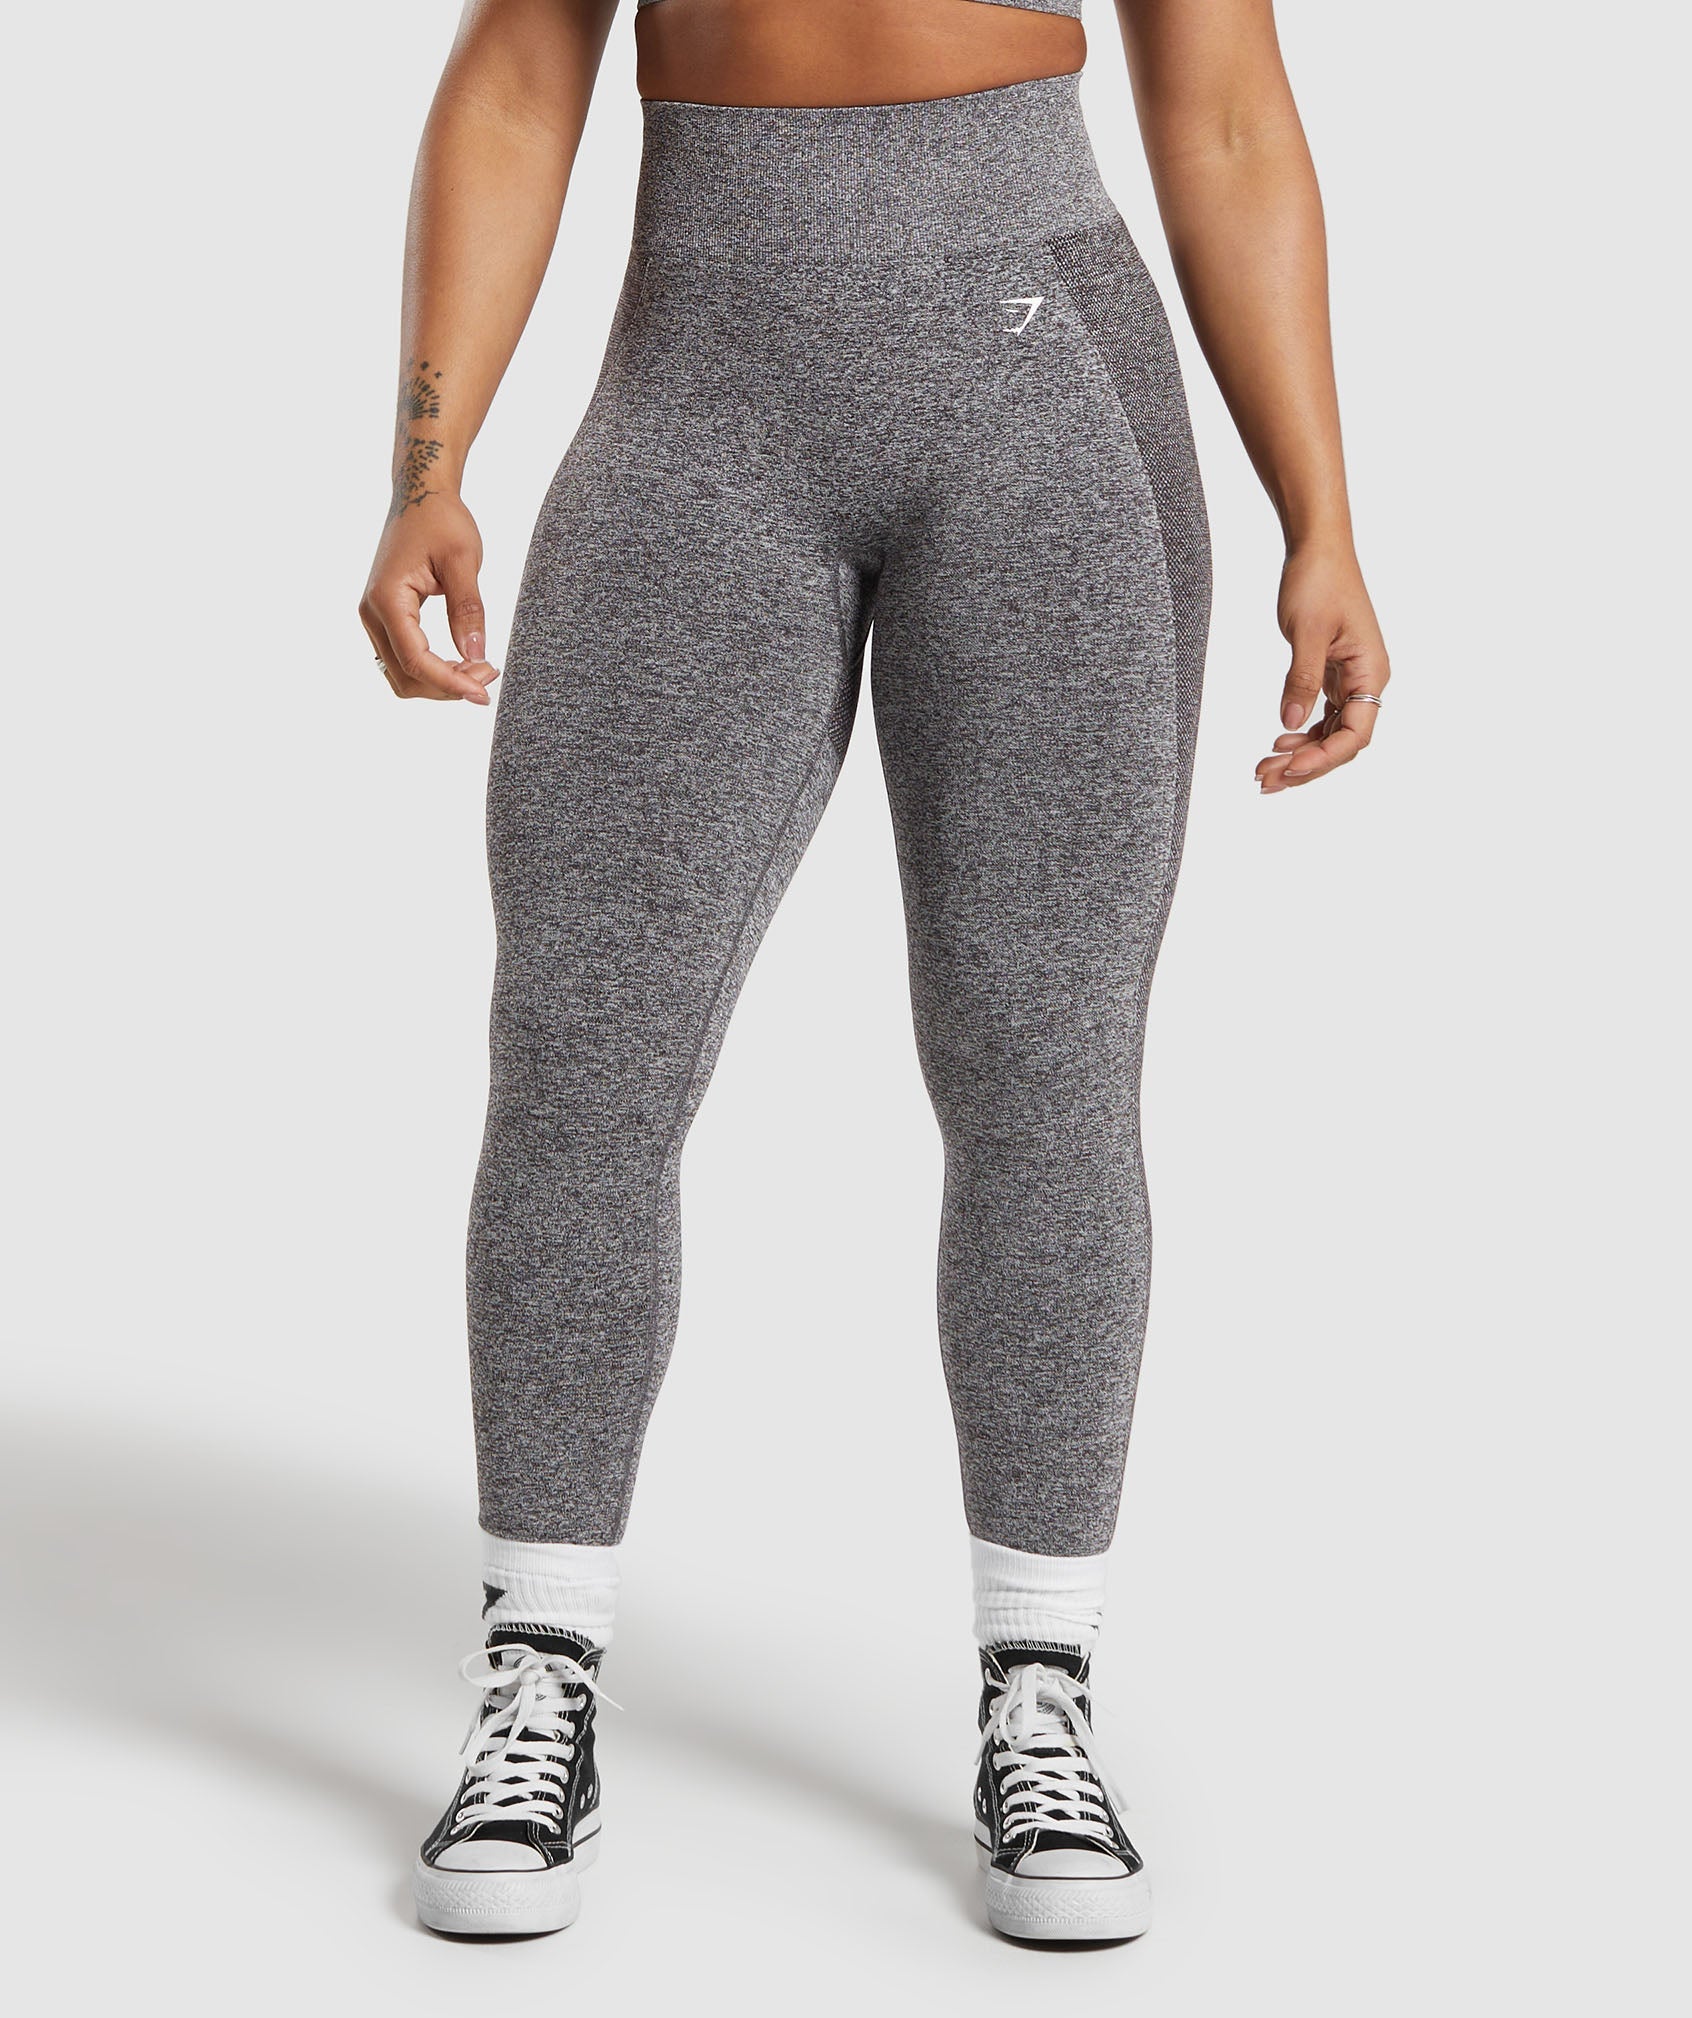 Gymshark High Waisted Flex Leggings Gray Size XS - $42 - From Karlee